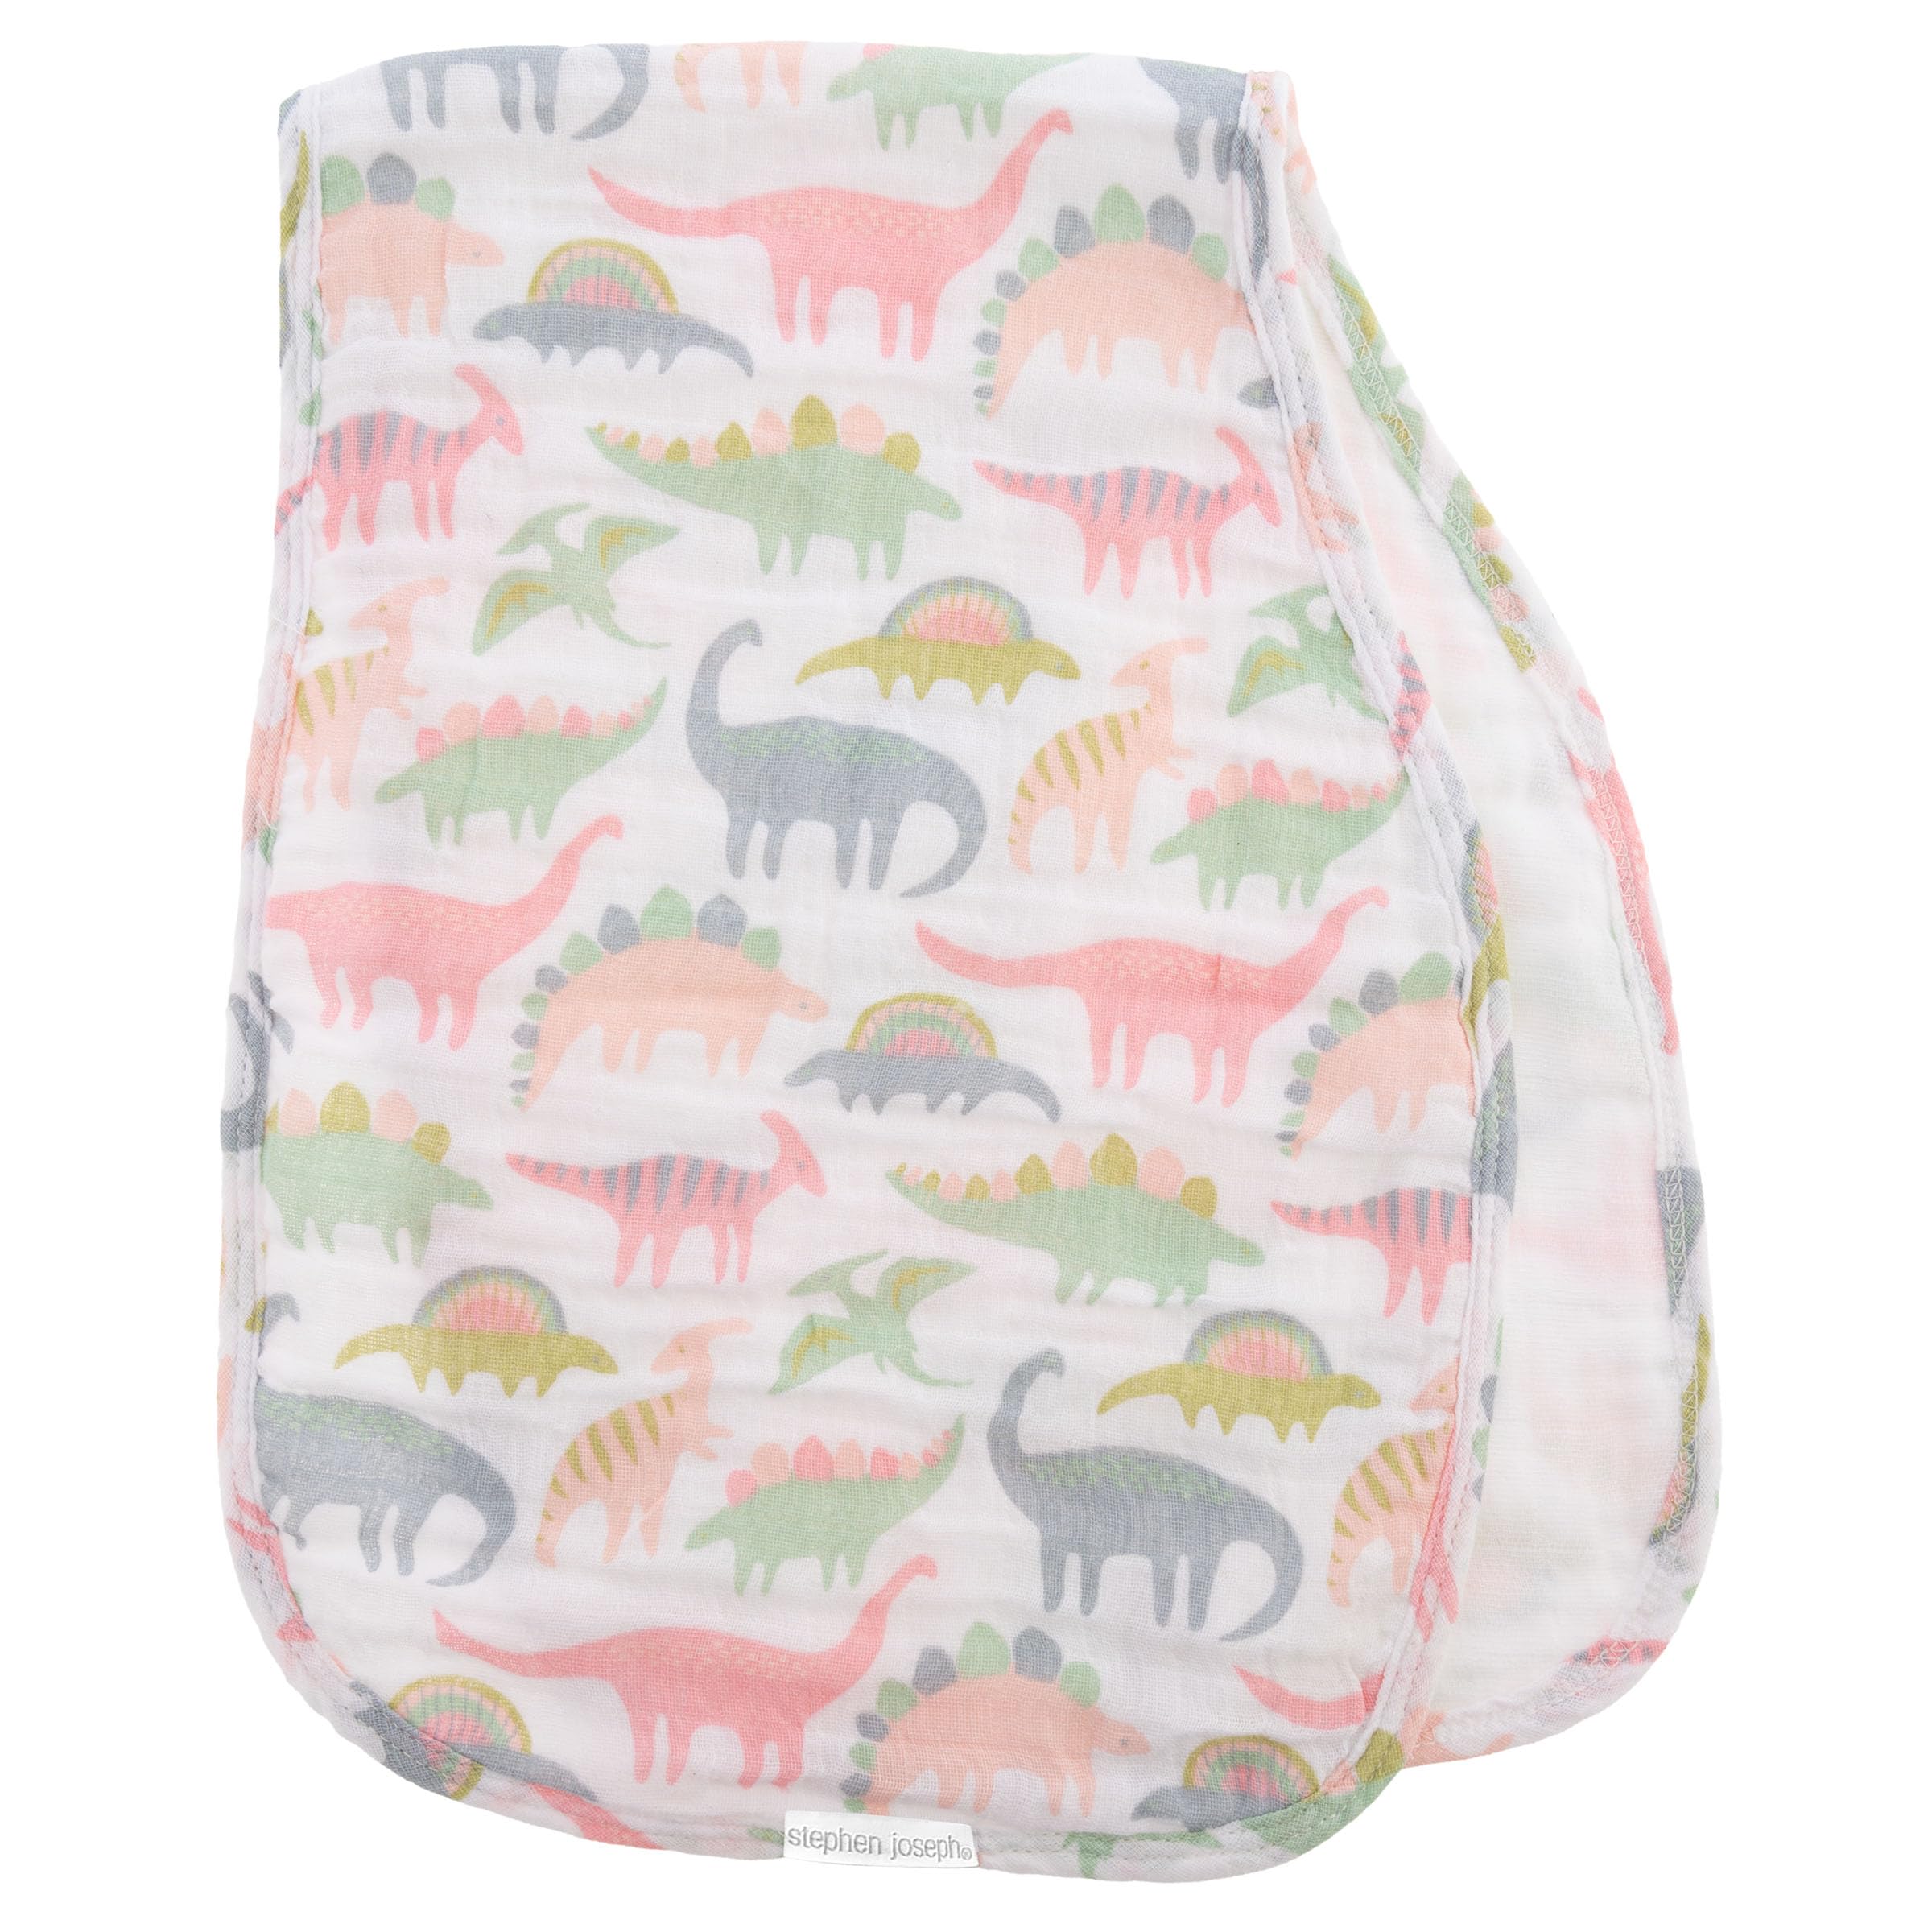 Stephen Joseph, Muslin Baby Burp Cloths, 2-Pack 100% Cotton,Burp Cloth for Baby Boys and Girls, Pink Dino